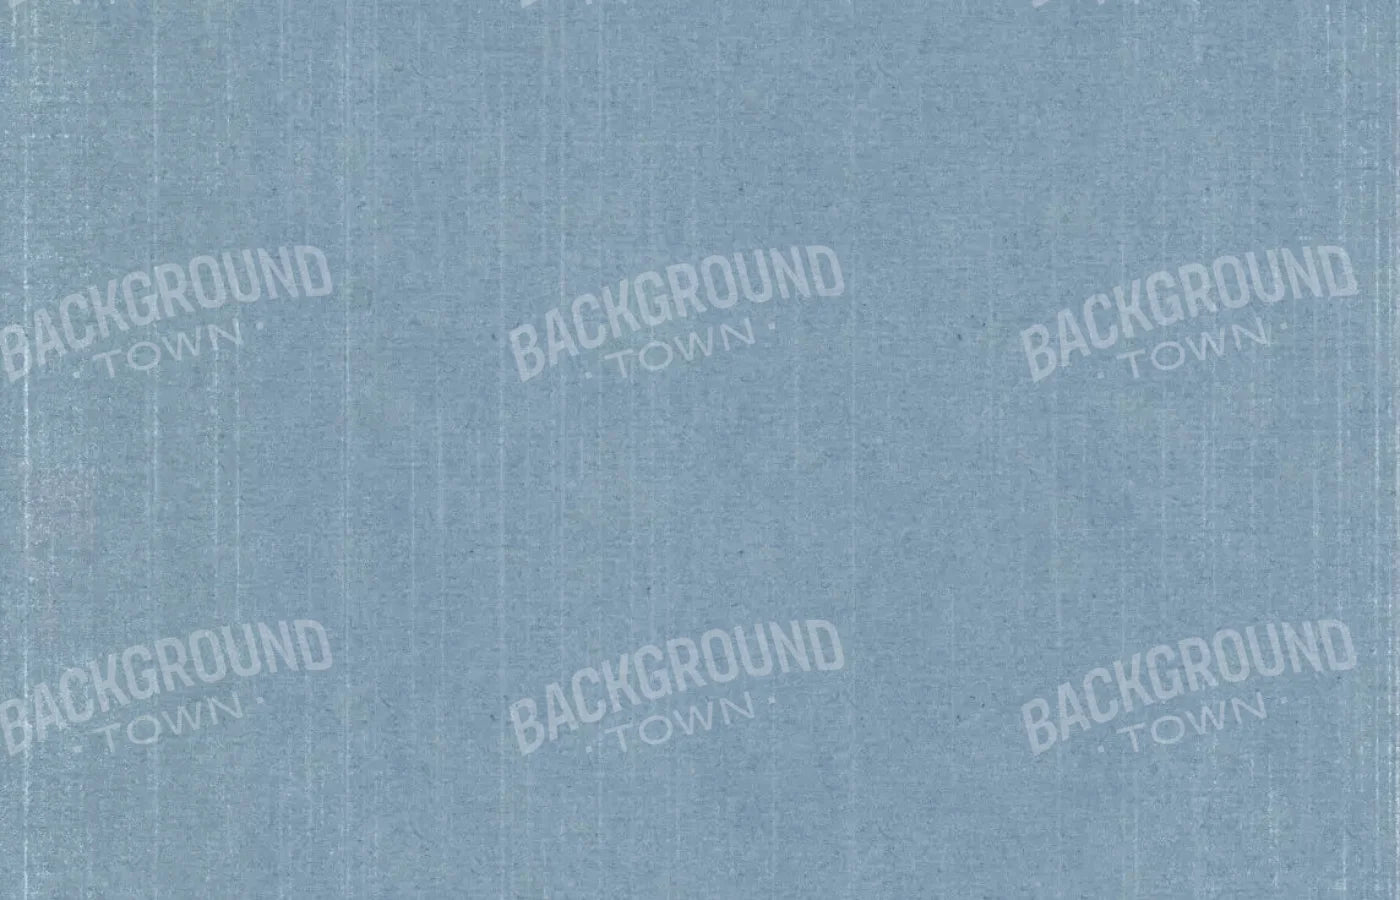 Bracken 12X8 Ultracloth ( 144 X 96 Inch ) Backdrop